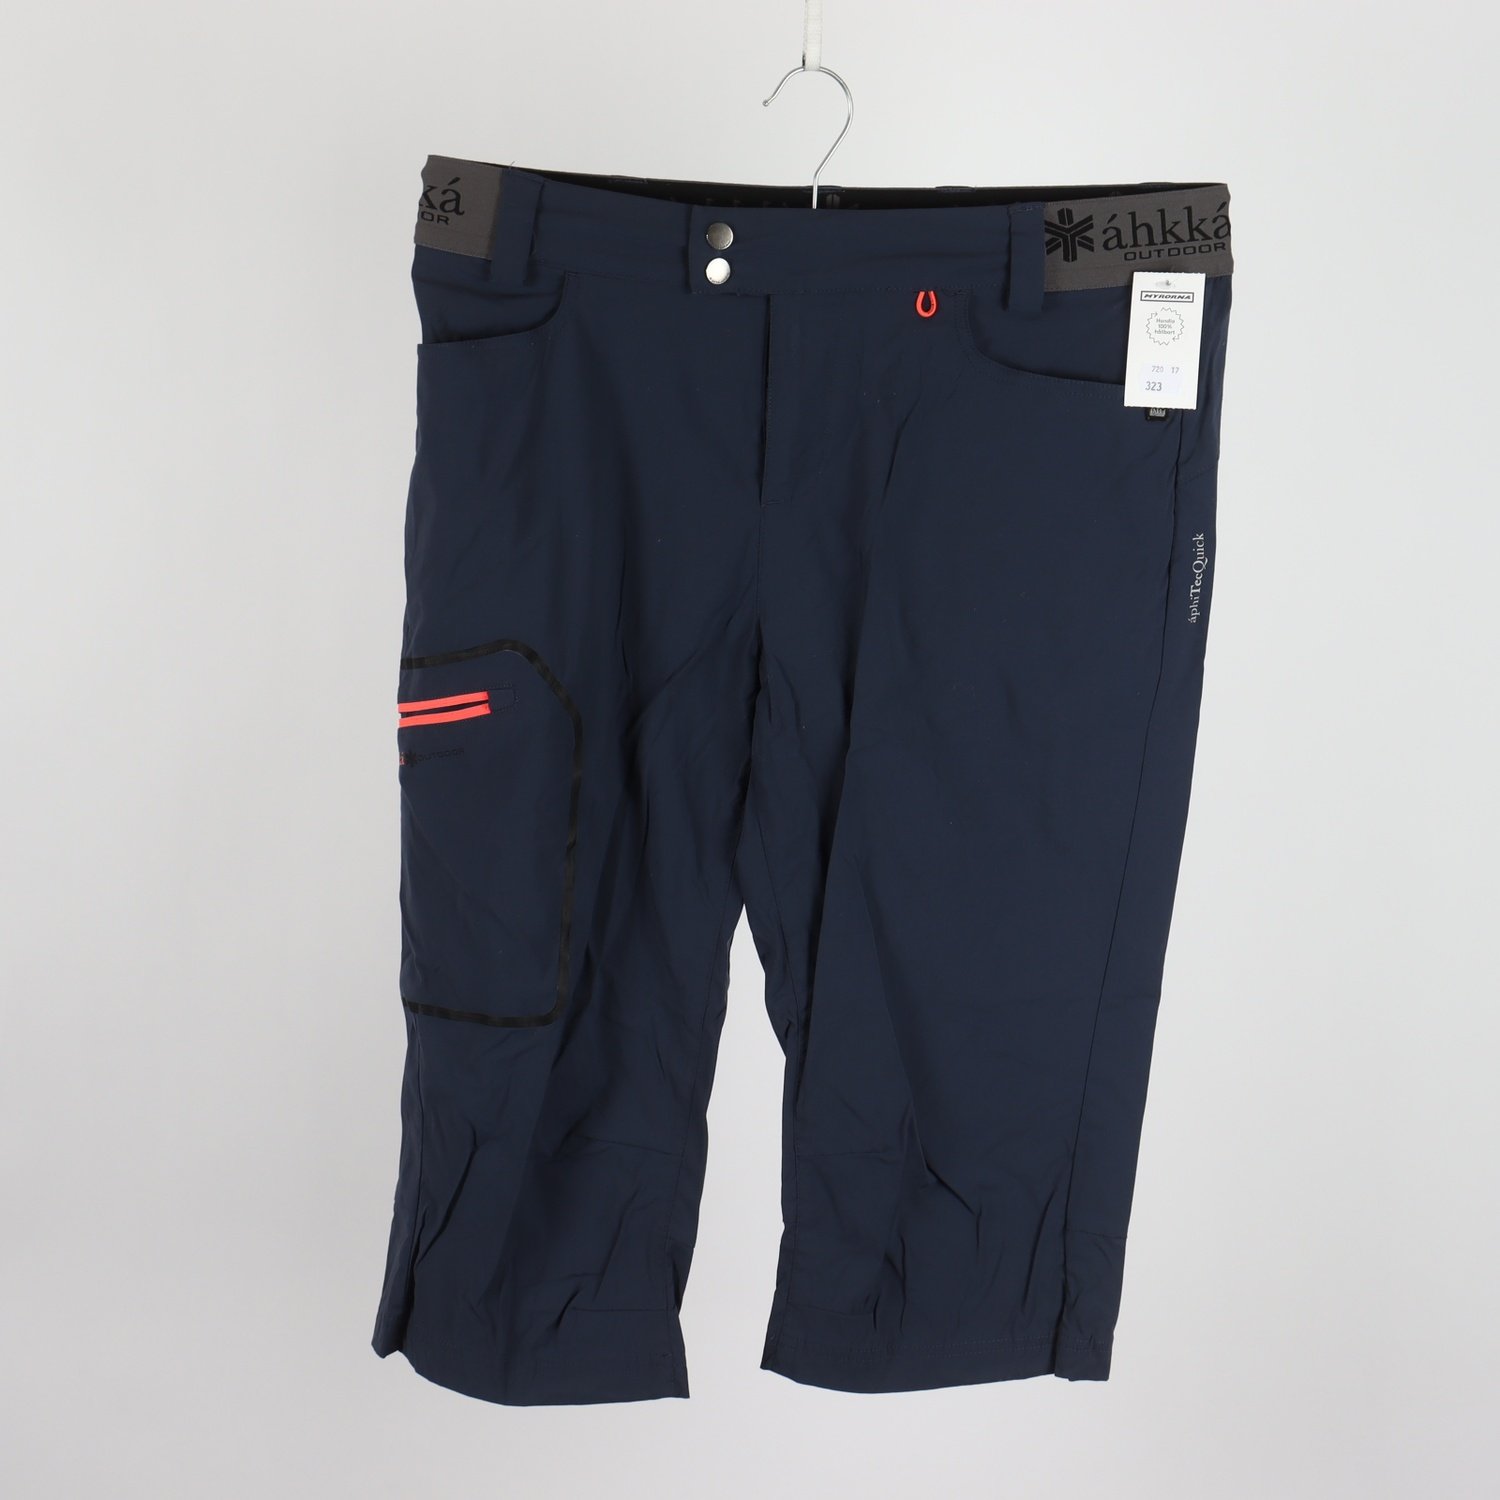 Shorts, áhkká Outdoor, blå, stl. 42